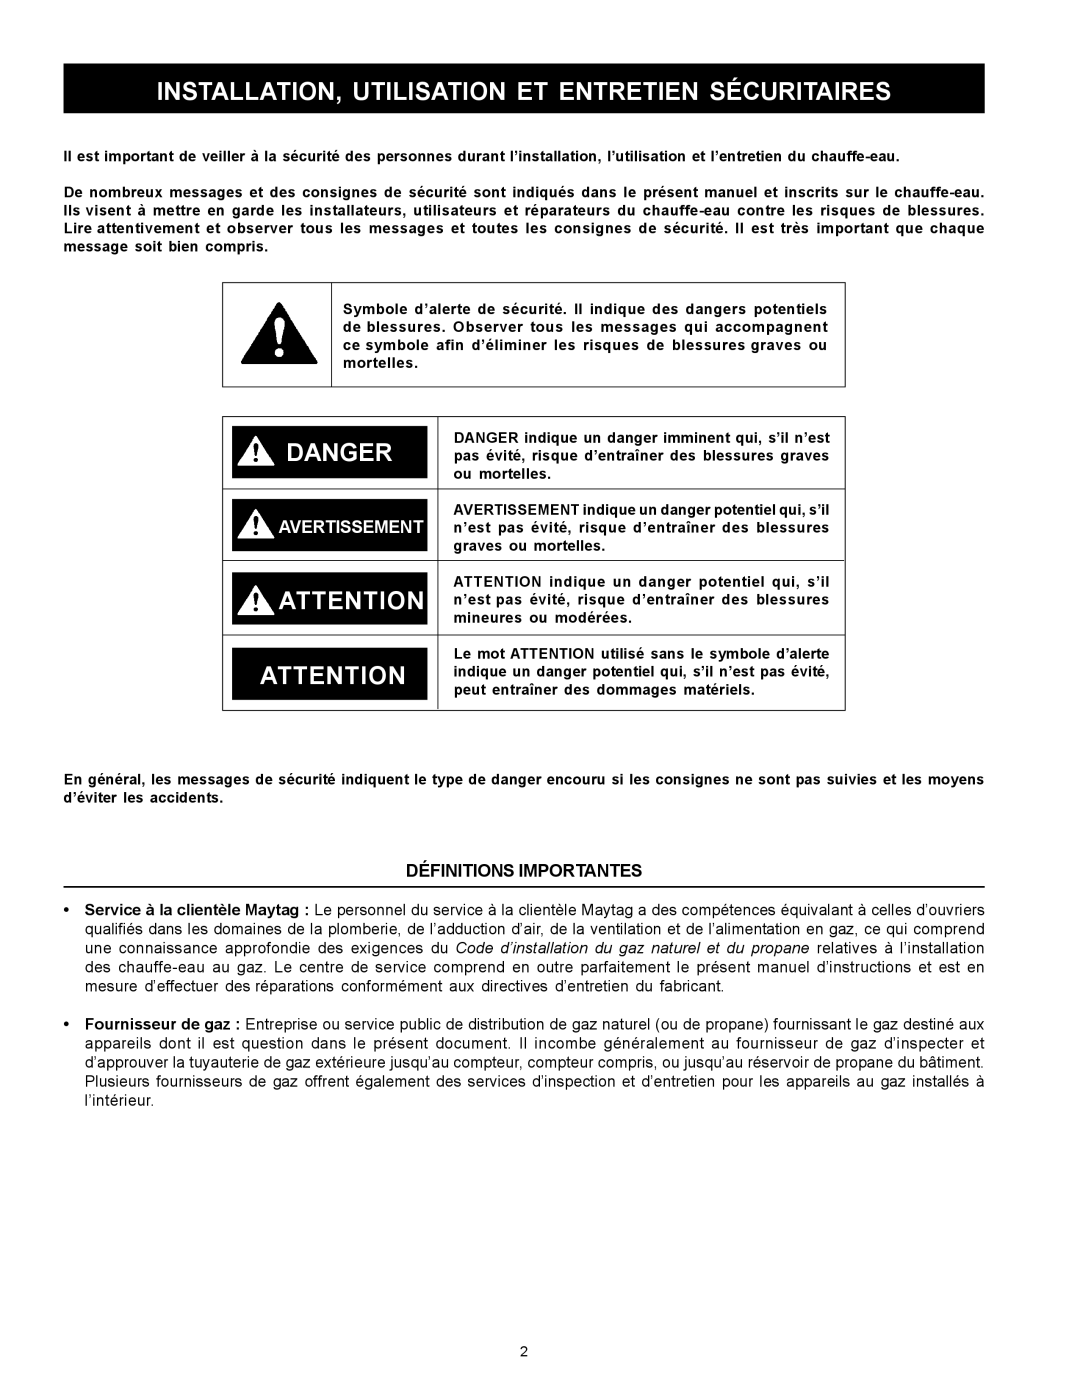 Maytag HXN4975S manual Avertissement, Définitions Importantes, Danger 